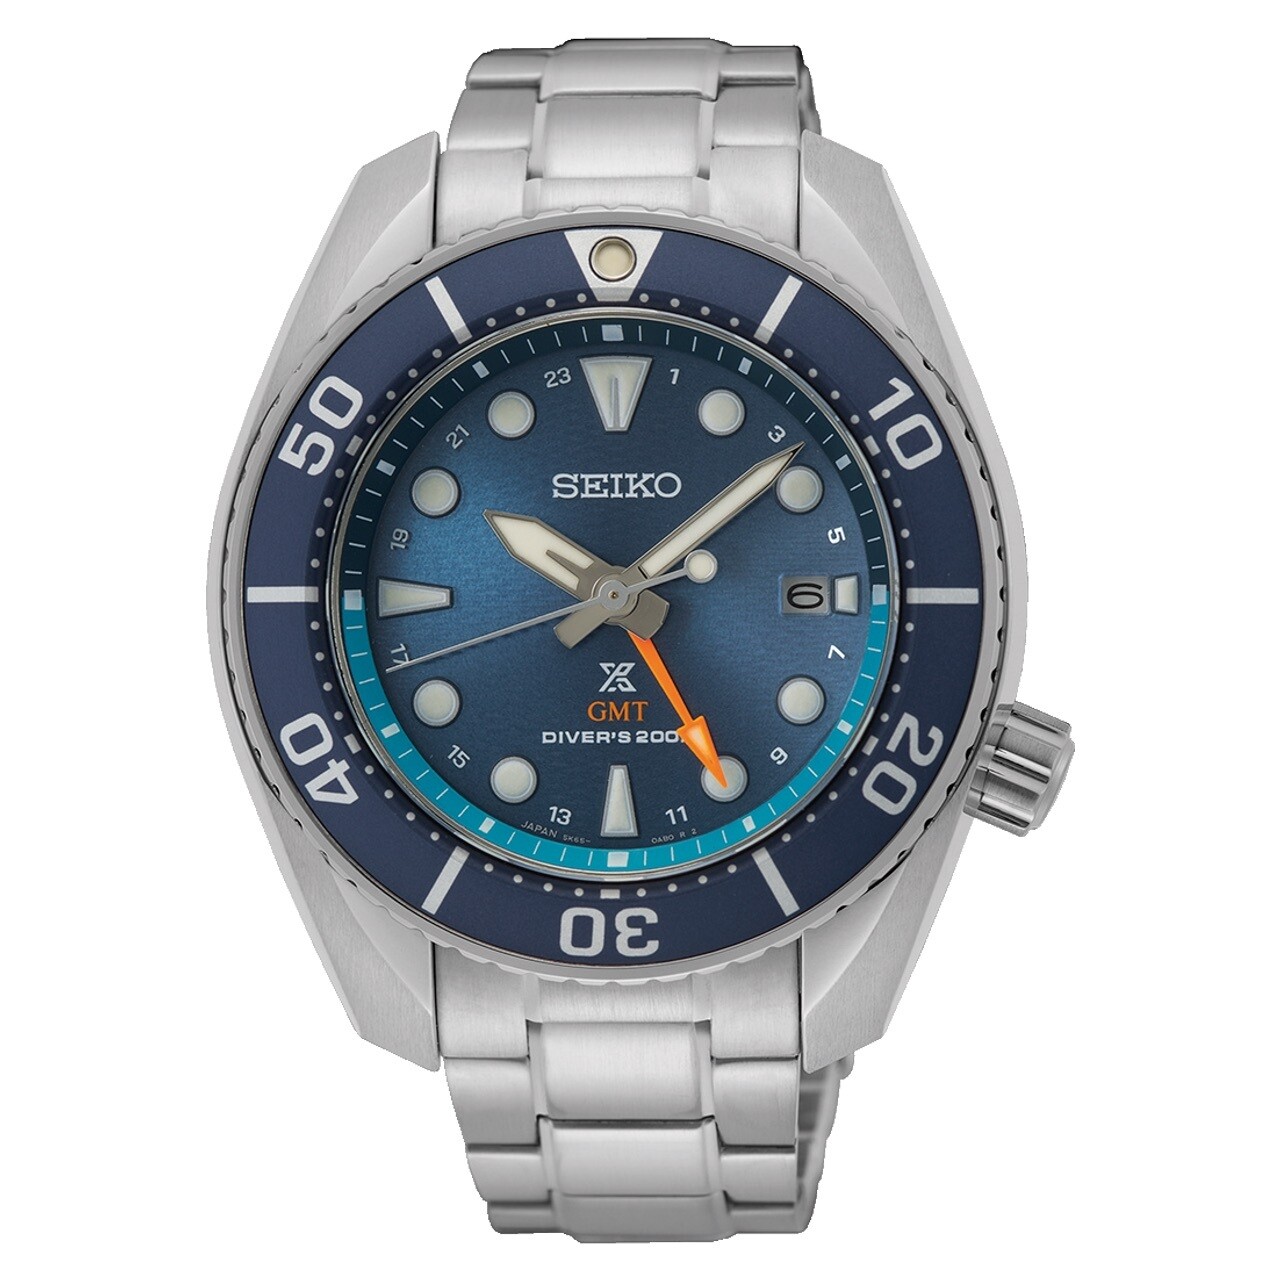 Seiko Prospex Aqua Sumo Solar GMT Diver SFK001J1 45mm 200m WR sapphire crystal solar powered divers men’s watch stainless steel bracelet